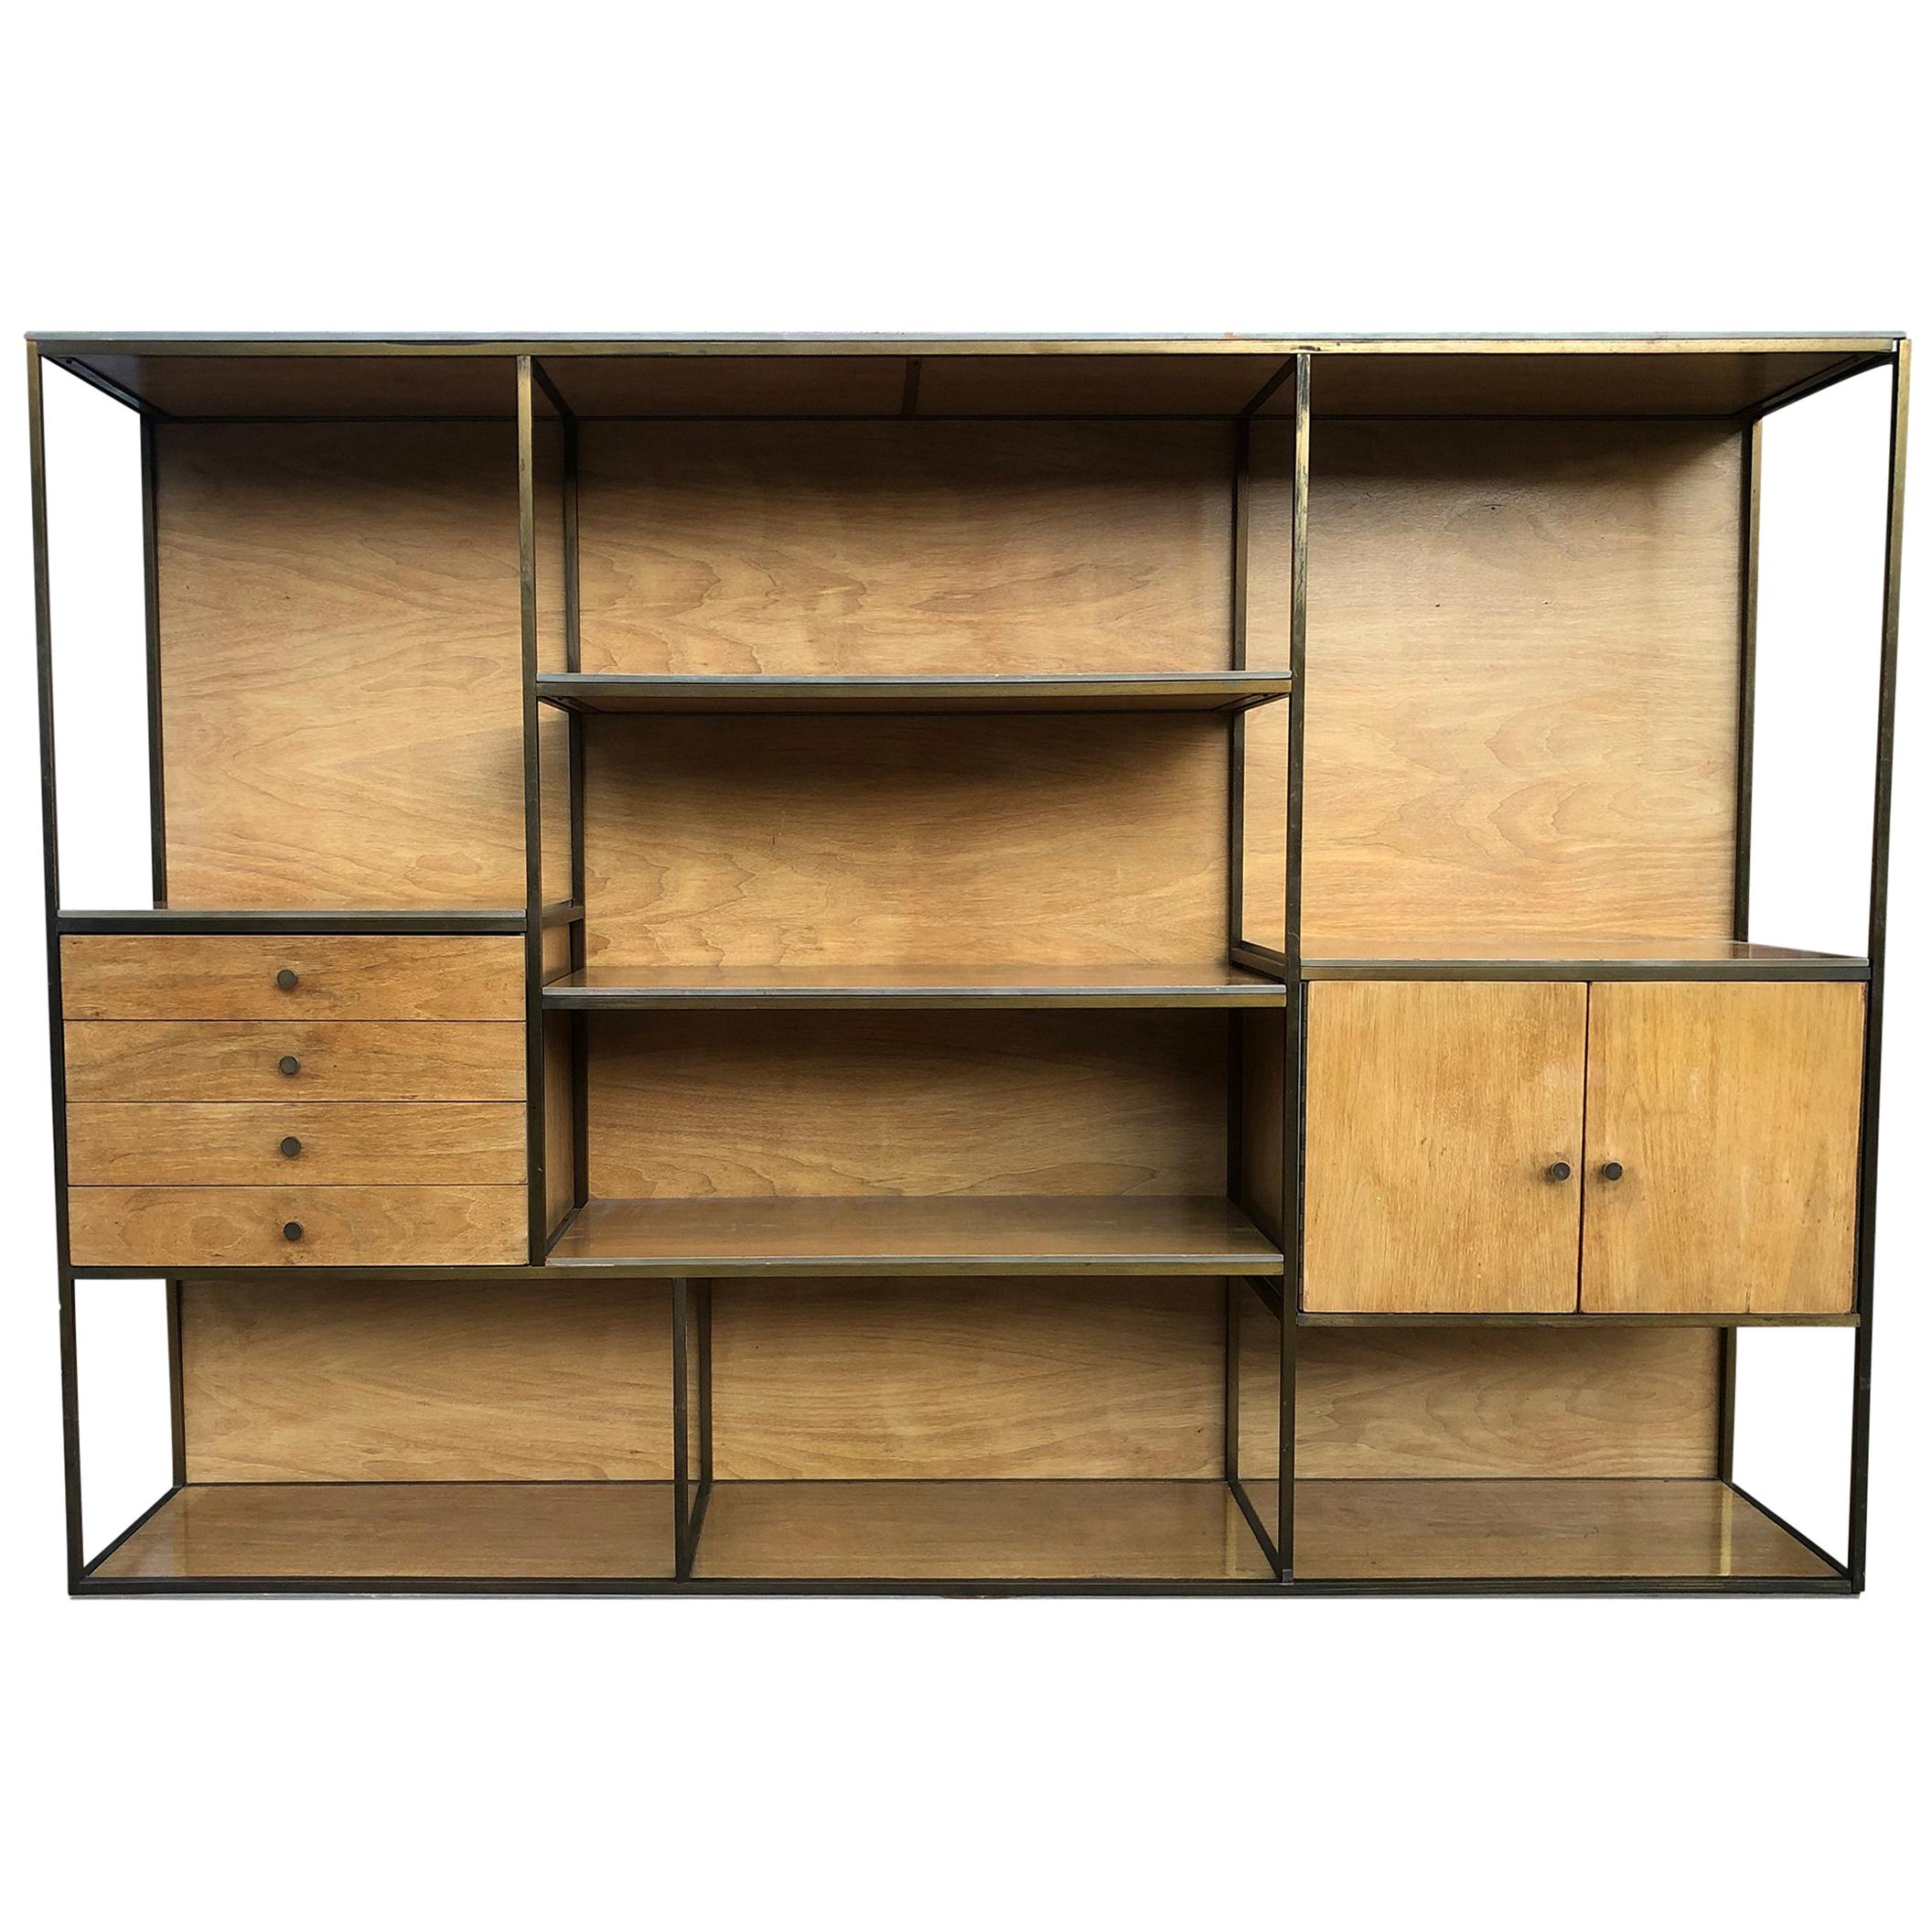 Paul McCobb Style Midcentury Low Brass Bookcase Room Divider Shelf Unit 4-Drawer